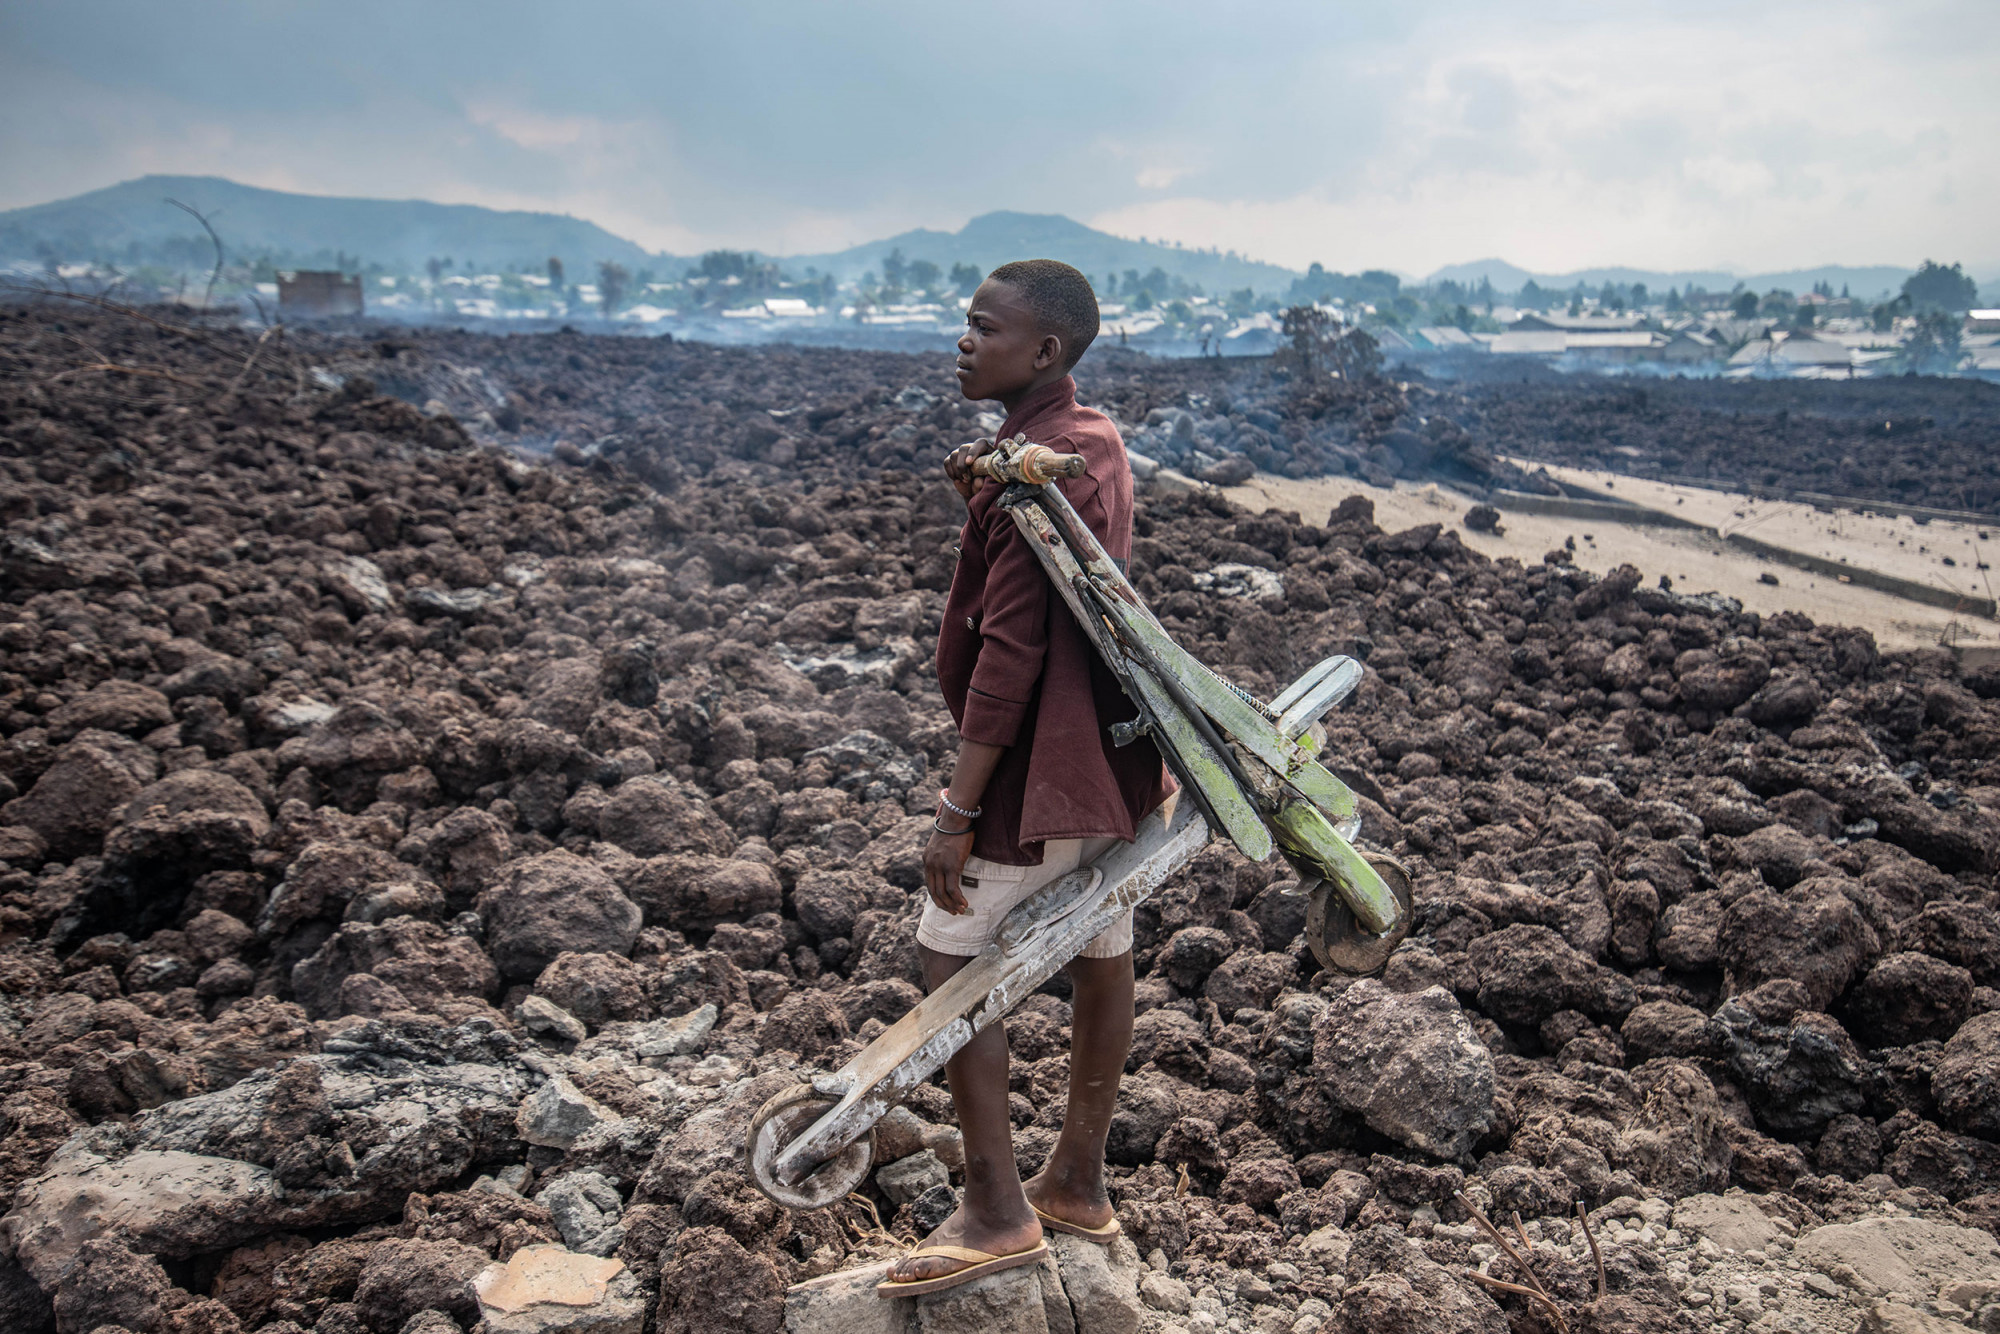 North Kivu, 23 May 2021. A boy carrying a Chukudu, or wooden bike, surveys lava cooling in the Buhene neighborhood after the eruption of Nyiragongo volcano. © Moses Sawasawa for Fondation Carmignac